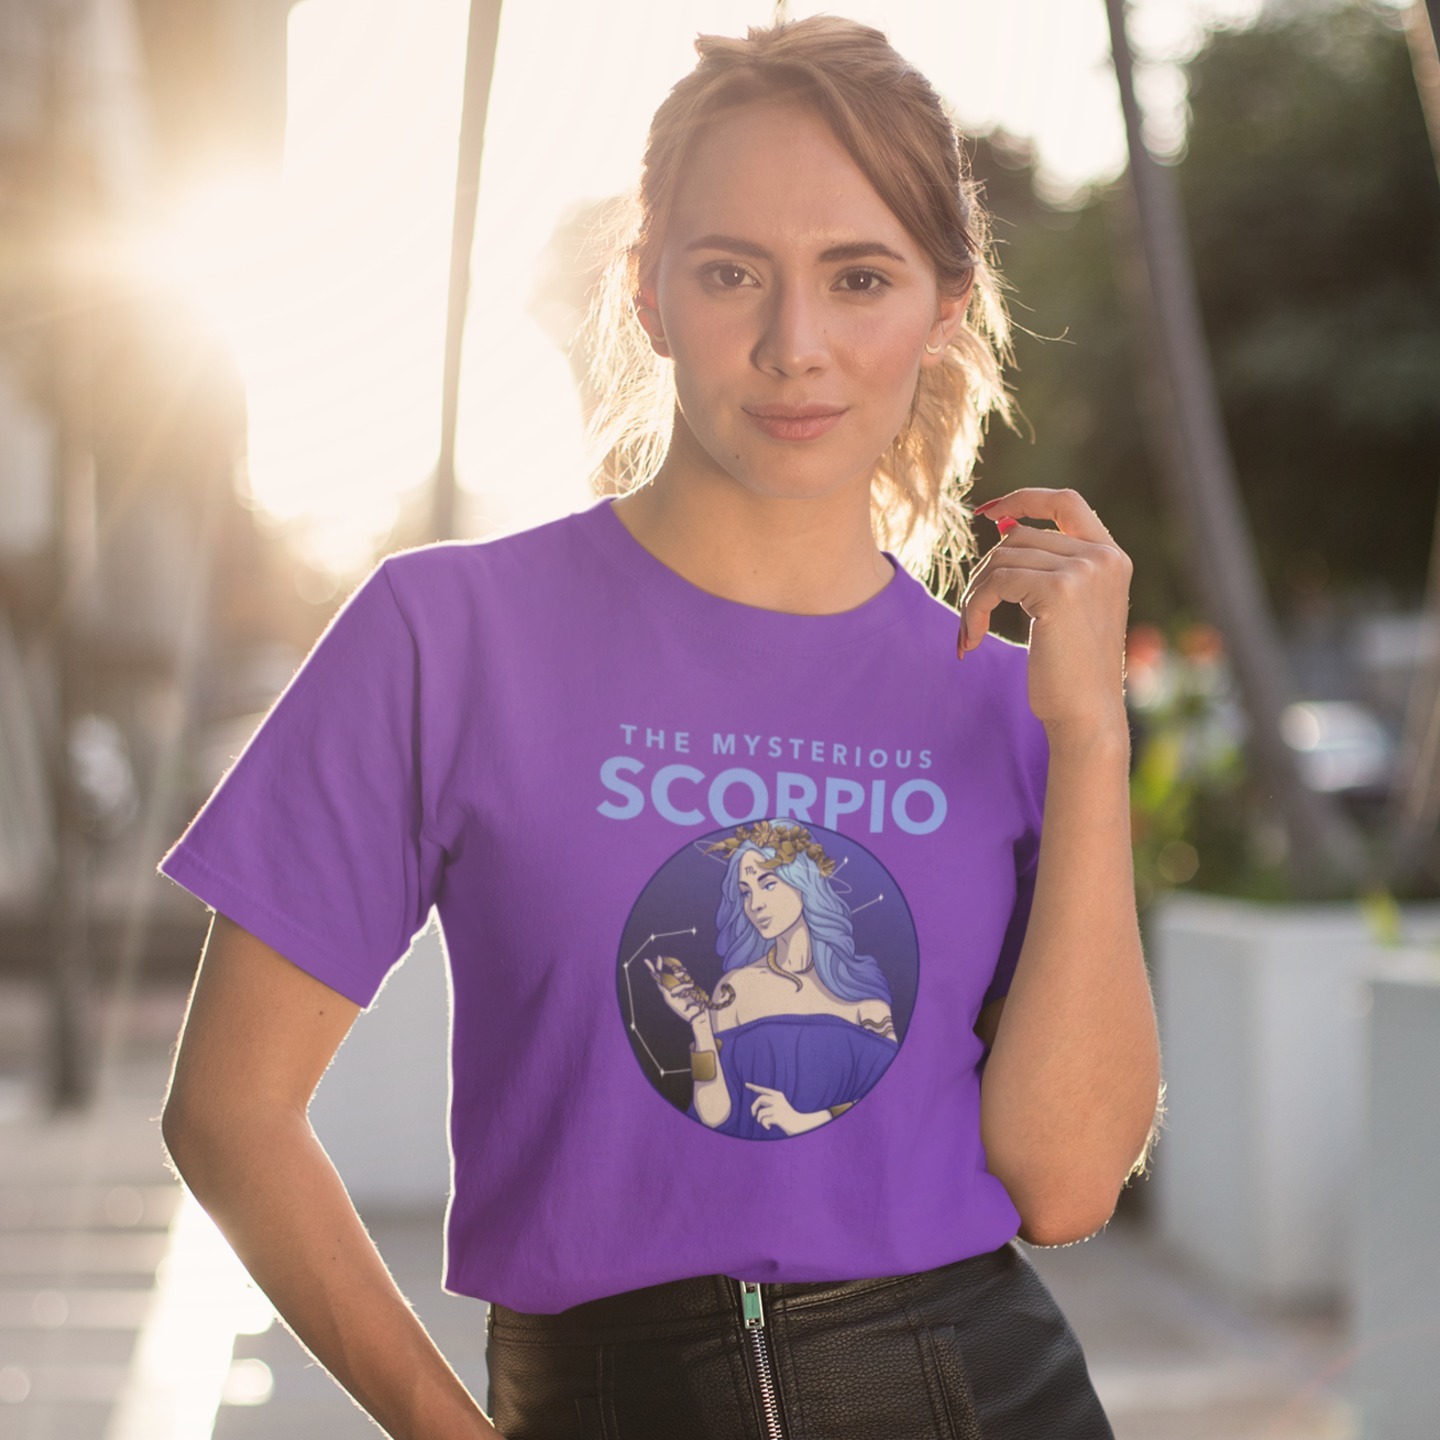 Scorpio-The Mysterious T-Shirt